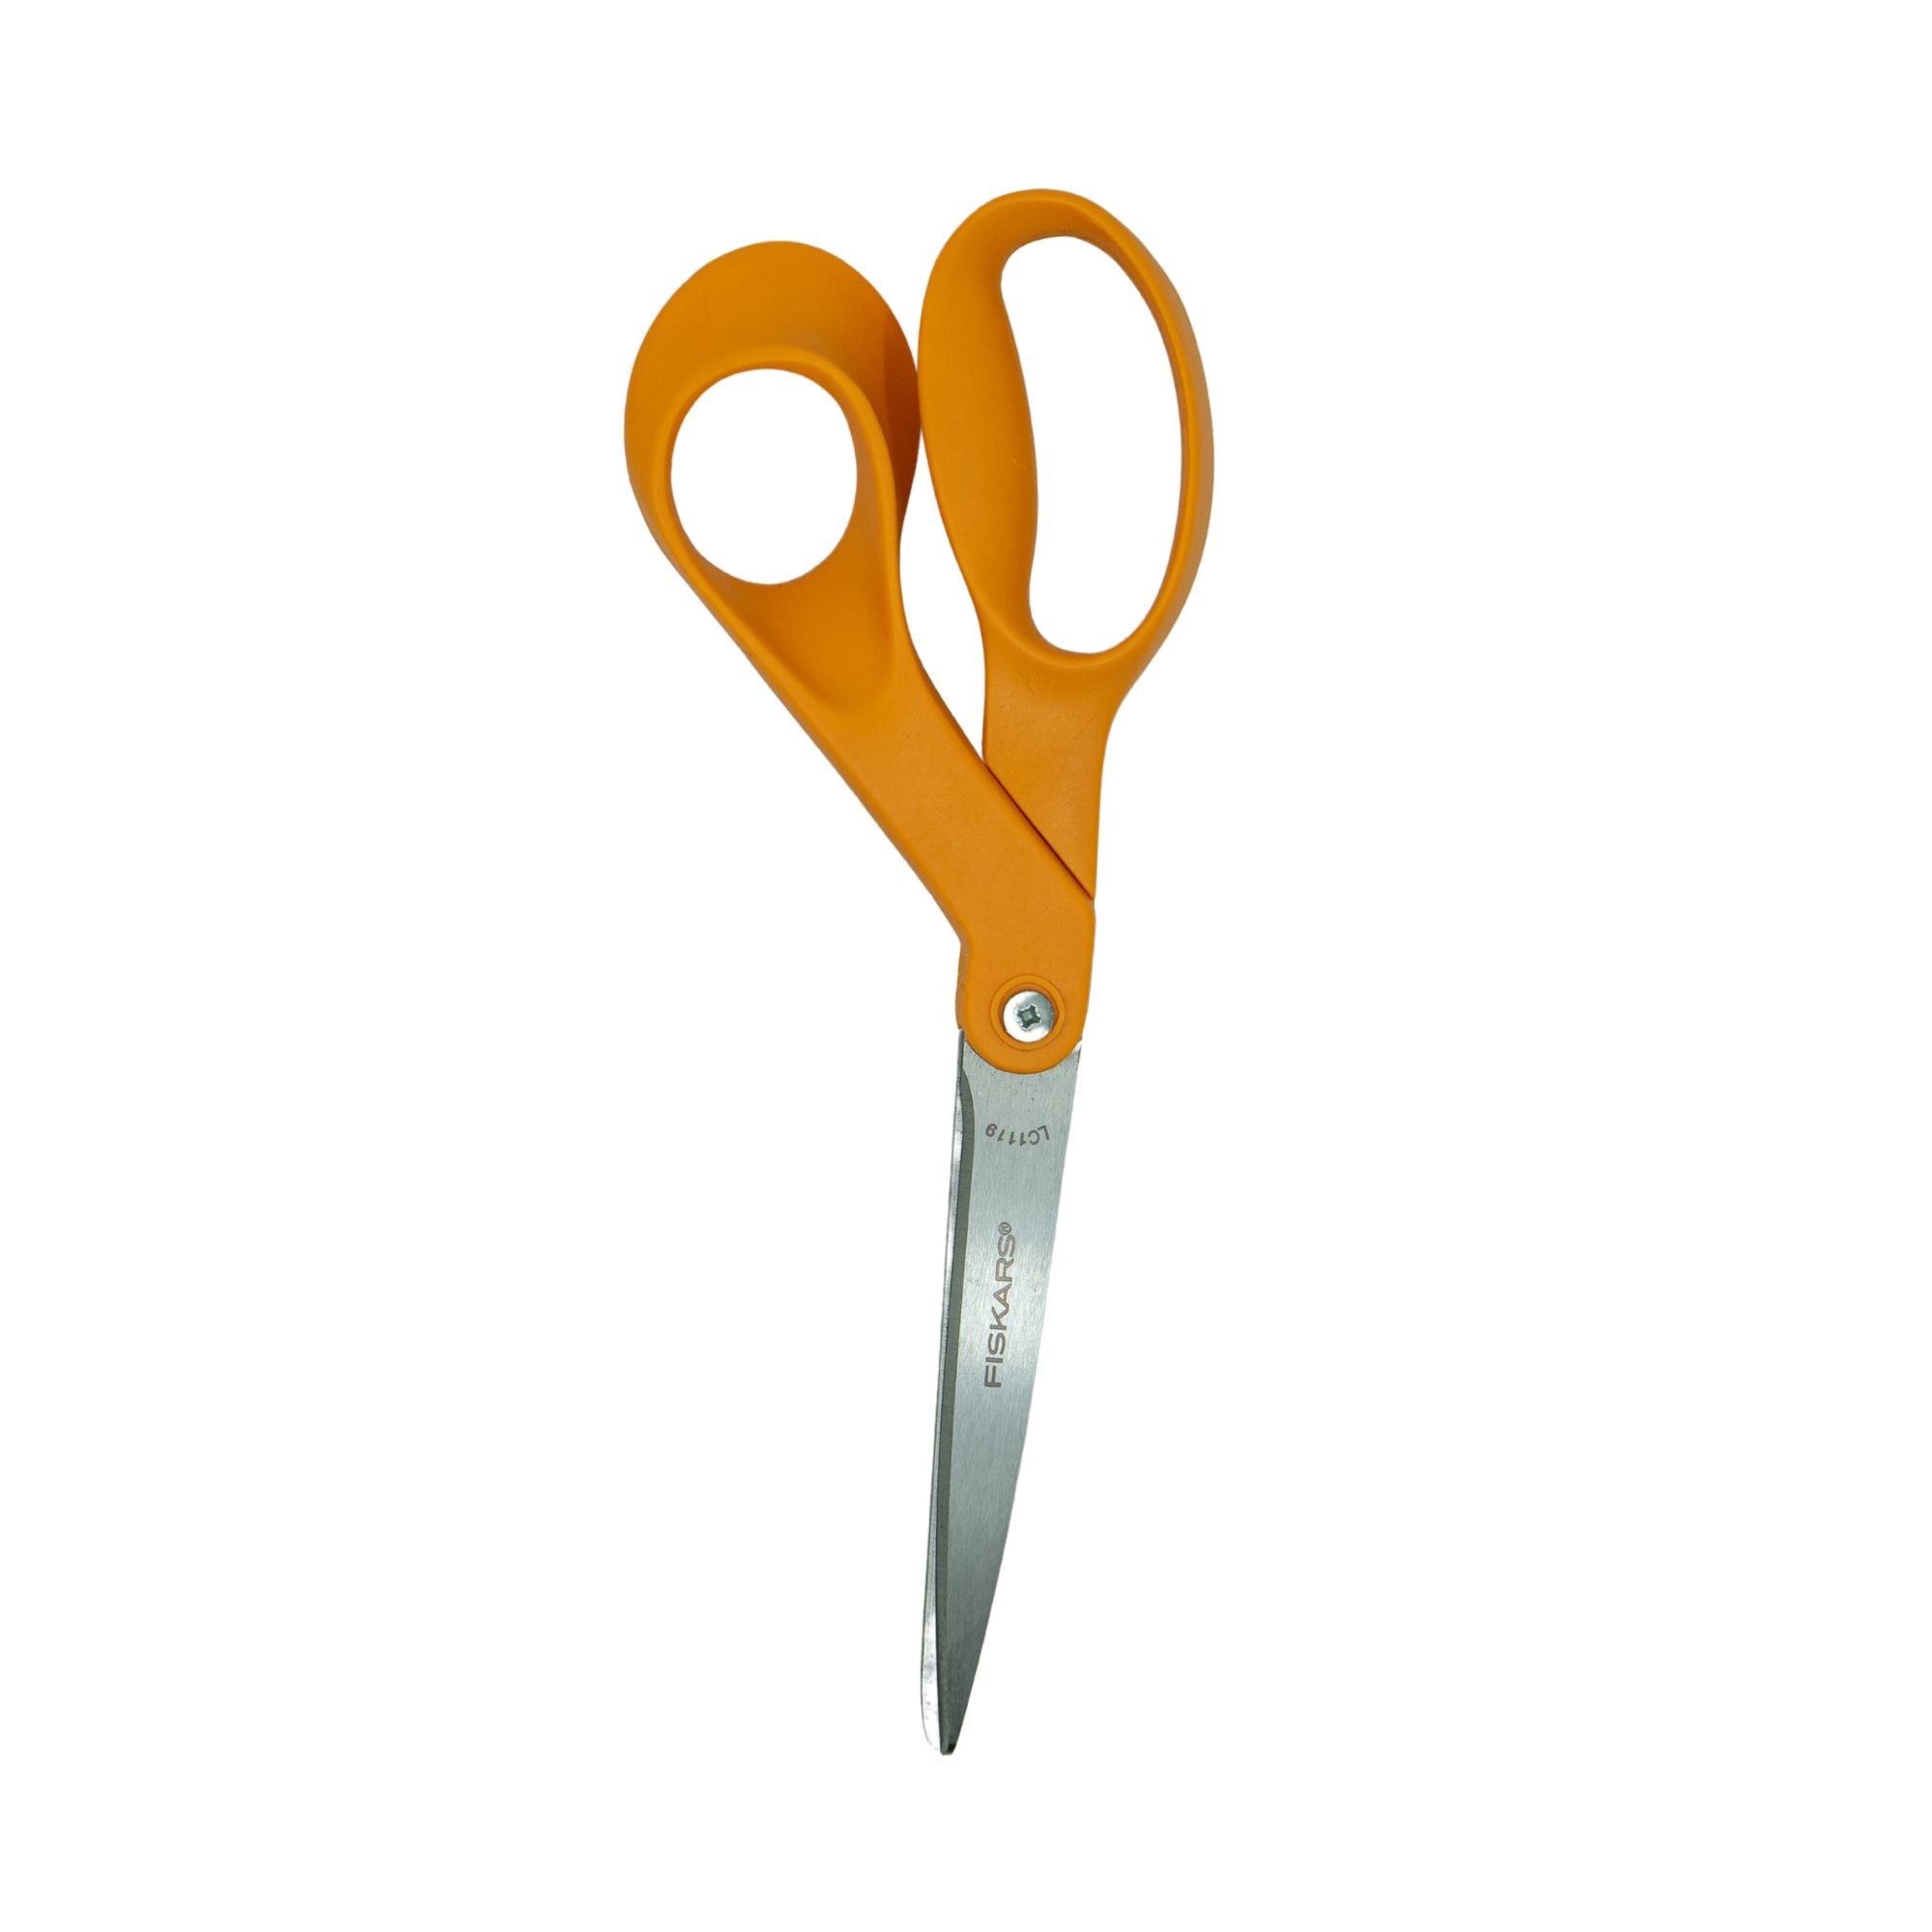 Fiskars Scissors 8 Bent Designer Limited Edition